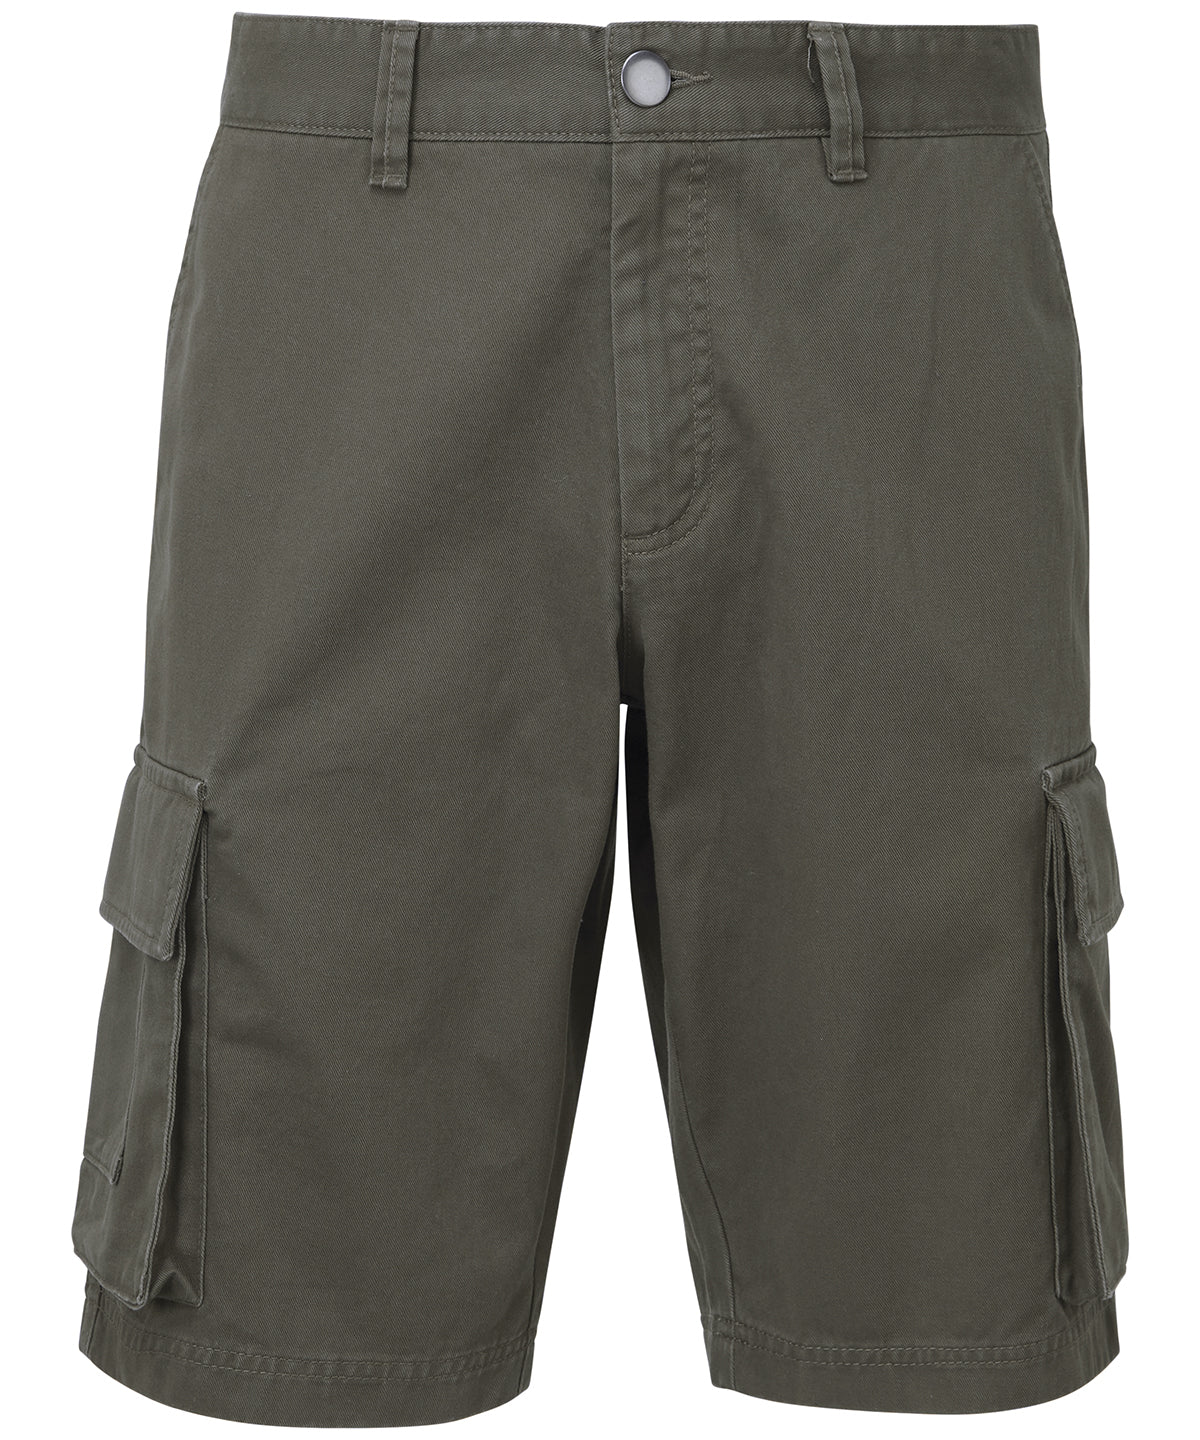 Personalised Shorts - Khaki Asquith & Fox Men's cargo shorts